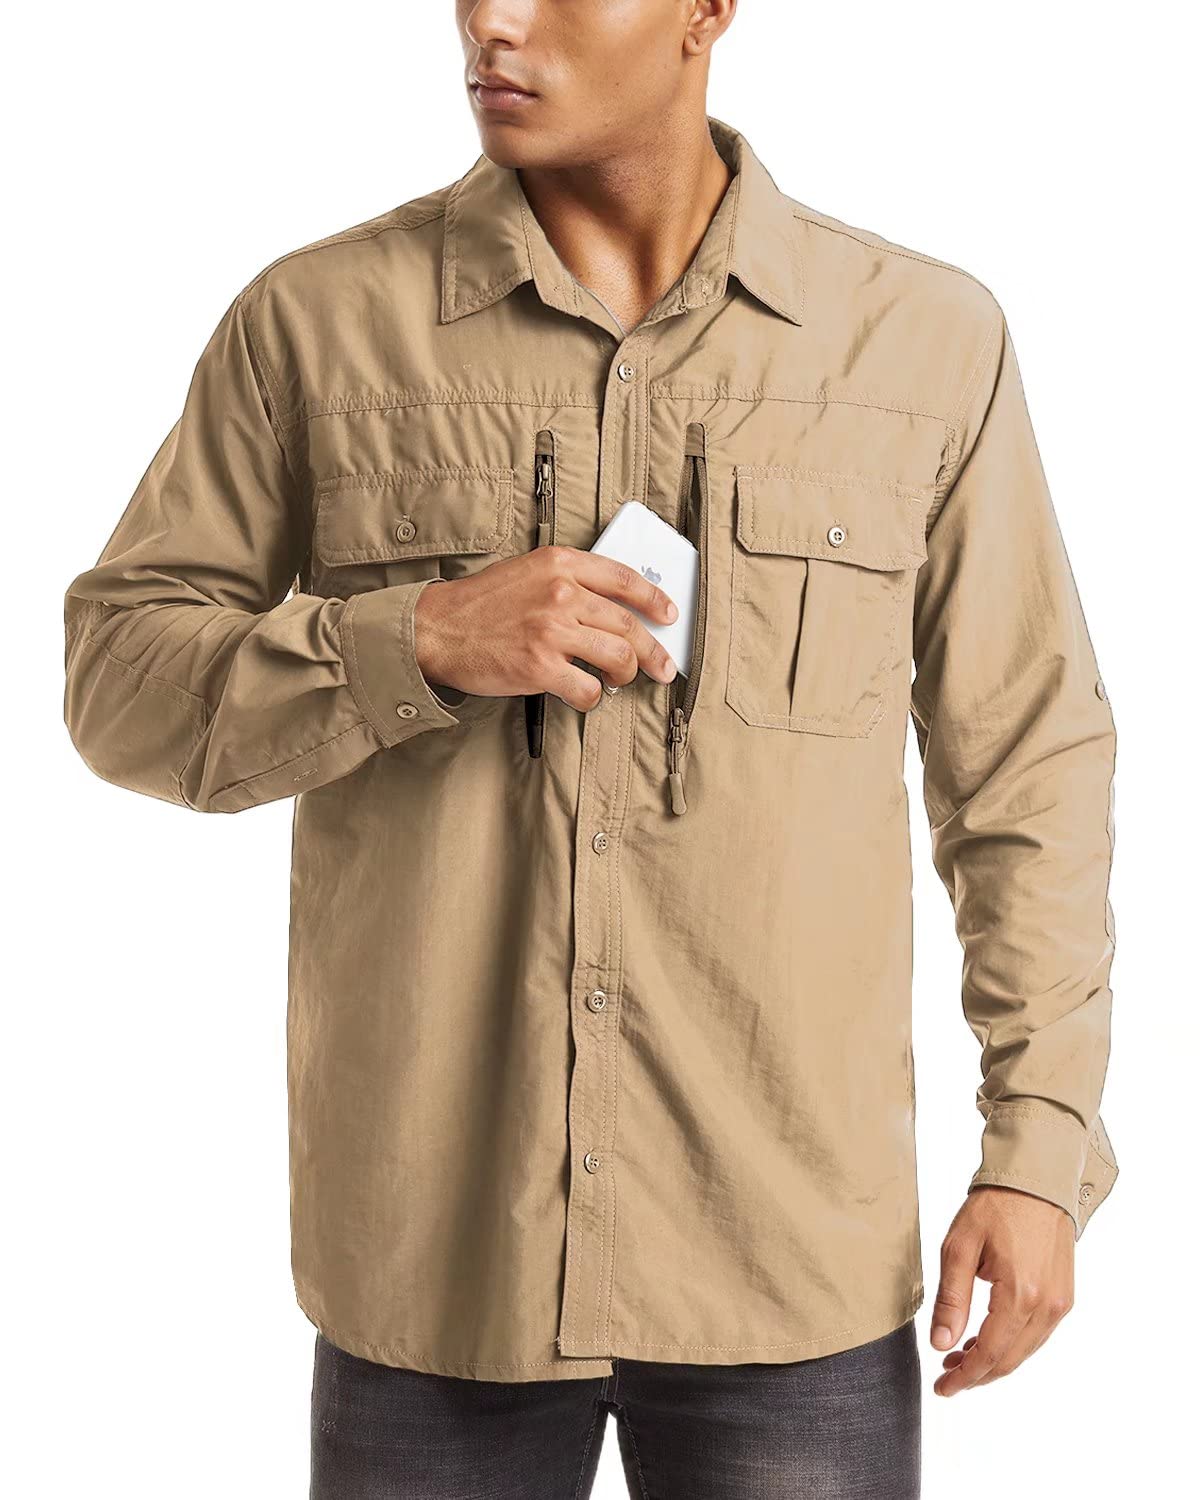 MAGCOMSEN Men's UPF 50+ Sun Protection Shirts, Button Down Long Sleeve Shirt for Hiking, Fishing, Work